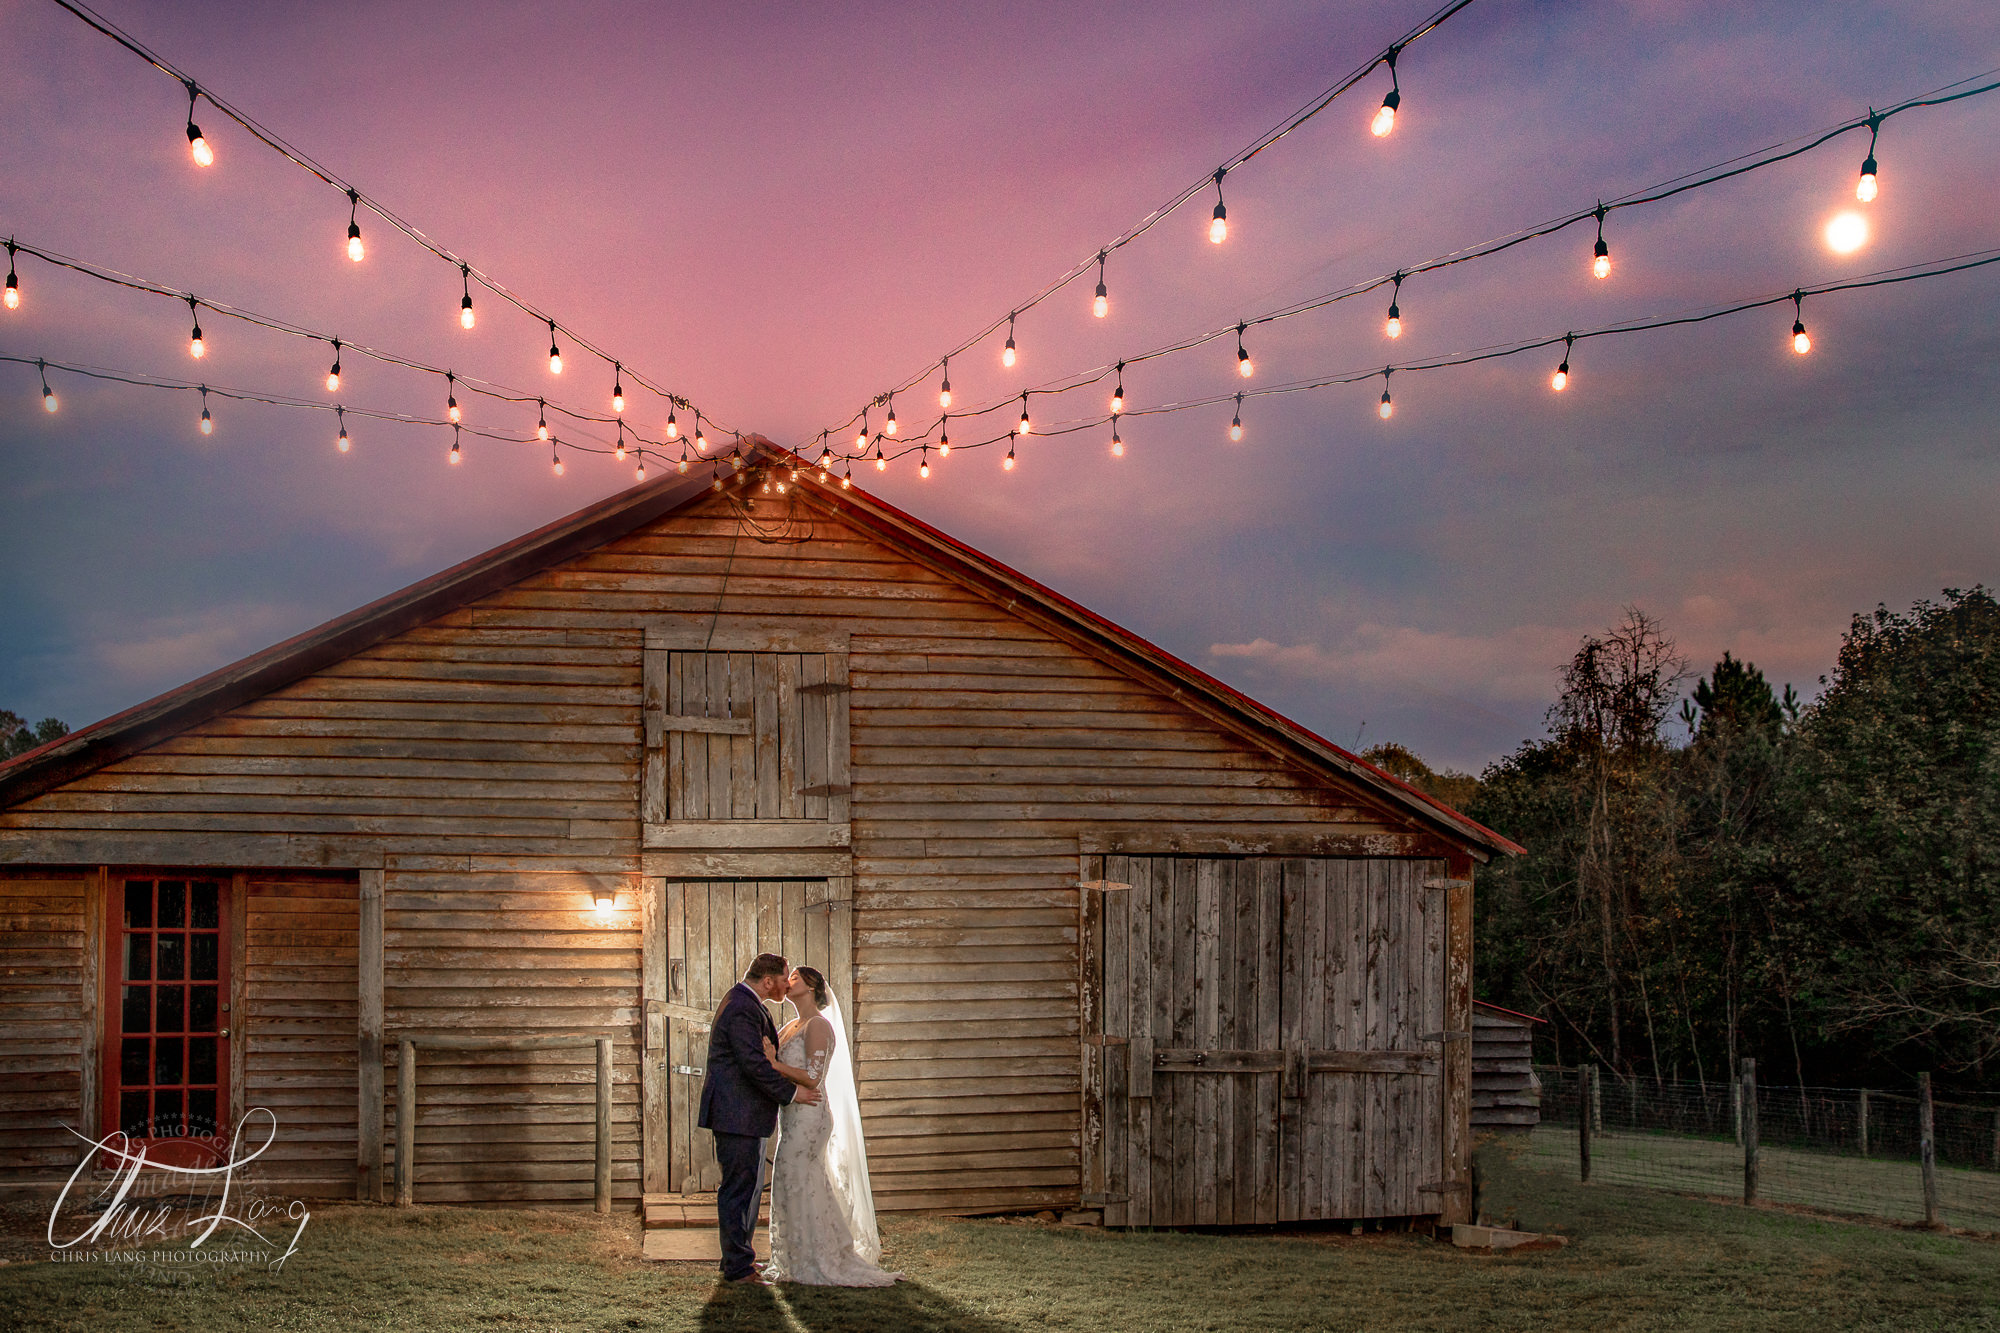 wilmingotn nc wedding photographer - wedding photo  - creative wedding photography - photo of bride & groom  in fron a barn under edison lighting - twilight wedding photo